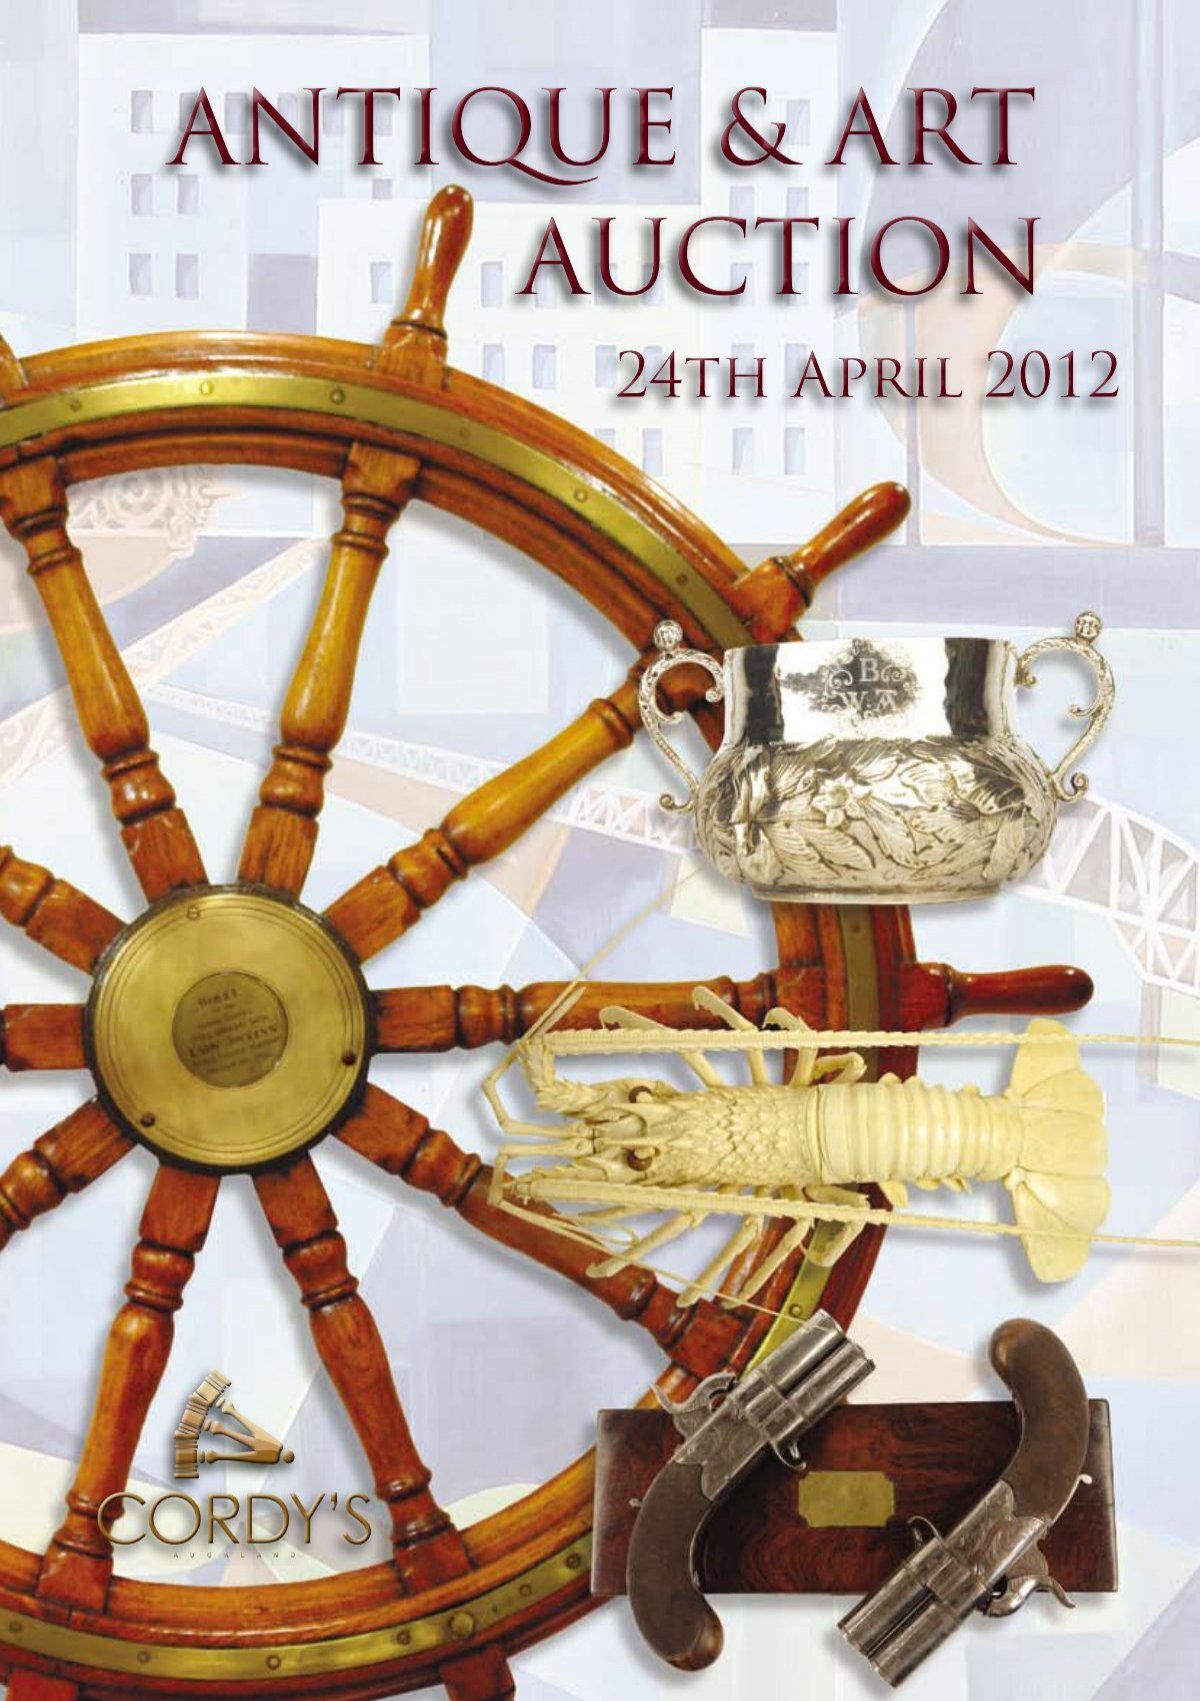  Mantel Clocks - Brass Ships Wheel Mantel Clock with Rope ON  Teak Wood Base - Nautical Decor : Home & Kitchen